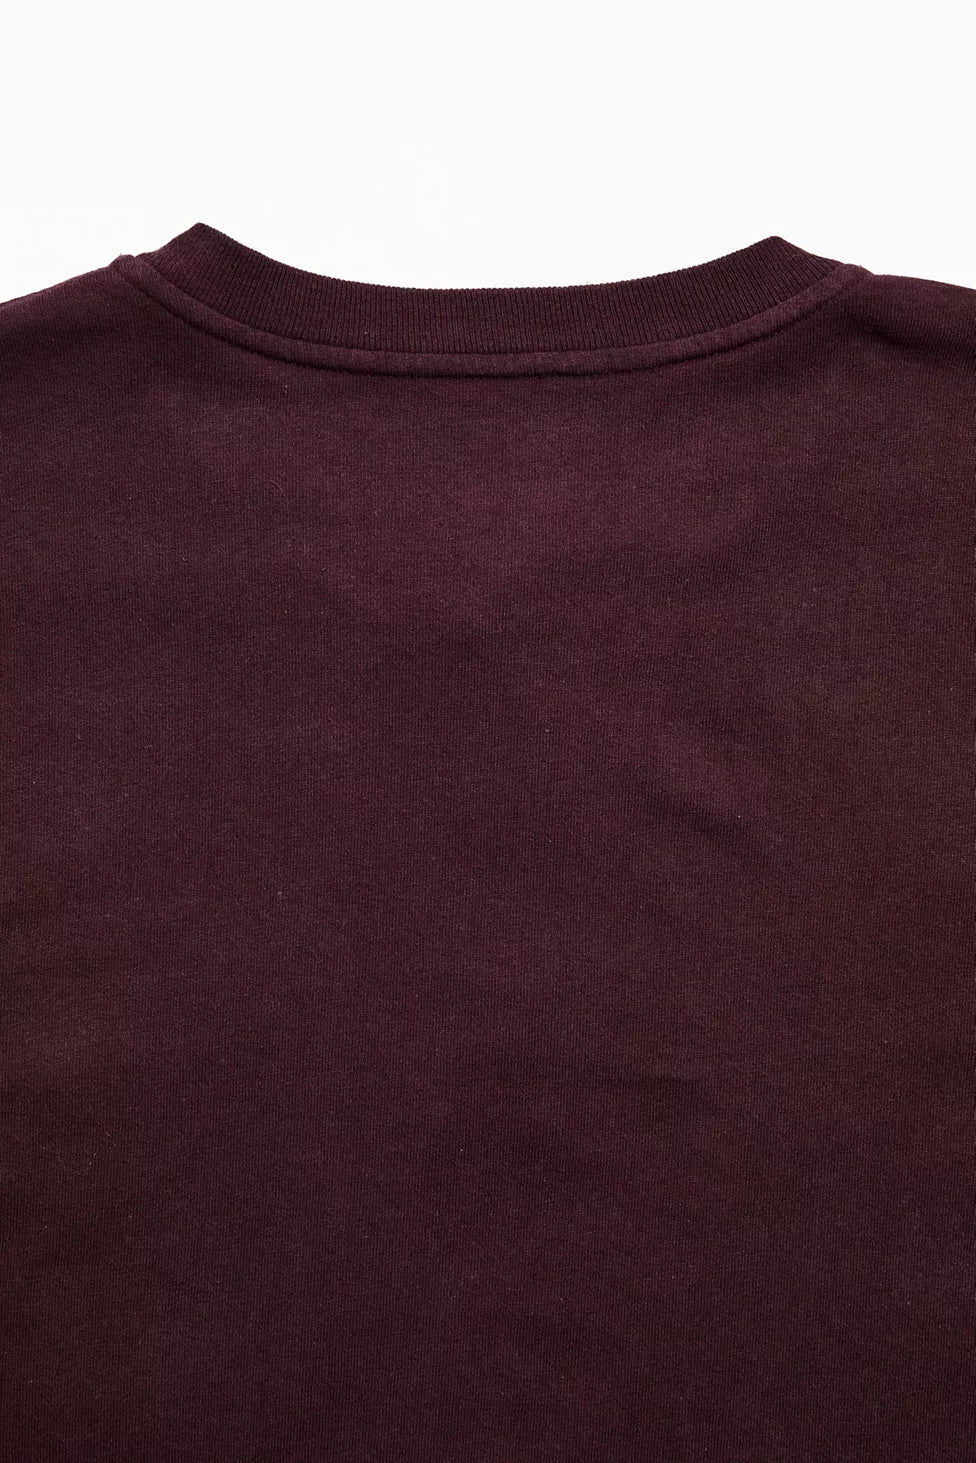 Carhartt vintage maroon long sleeve shirt men’s oversized medium